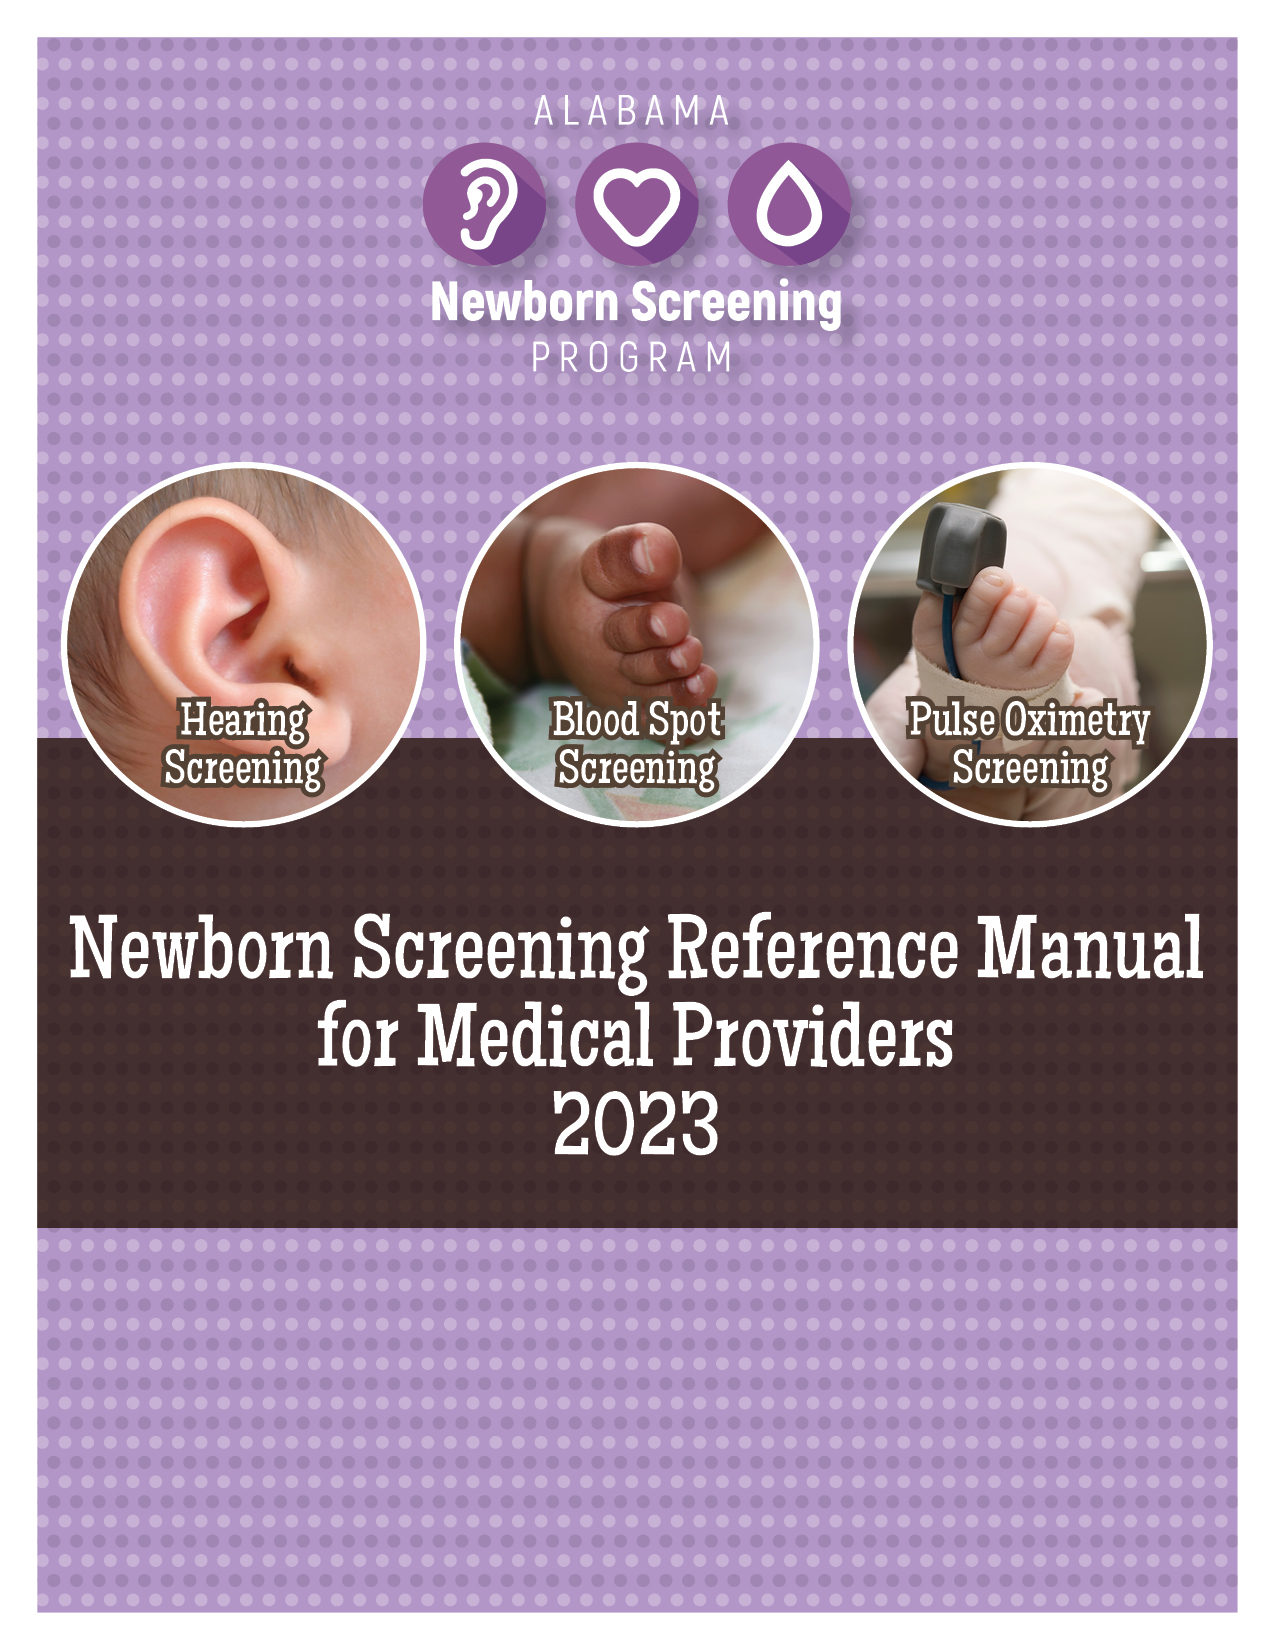 Newborn Screening Provider Manual (2023)